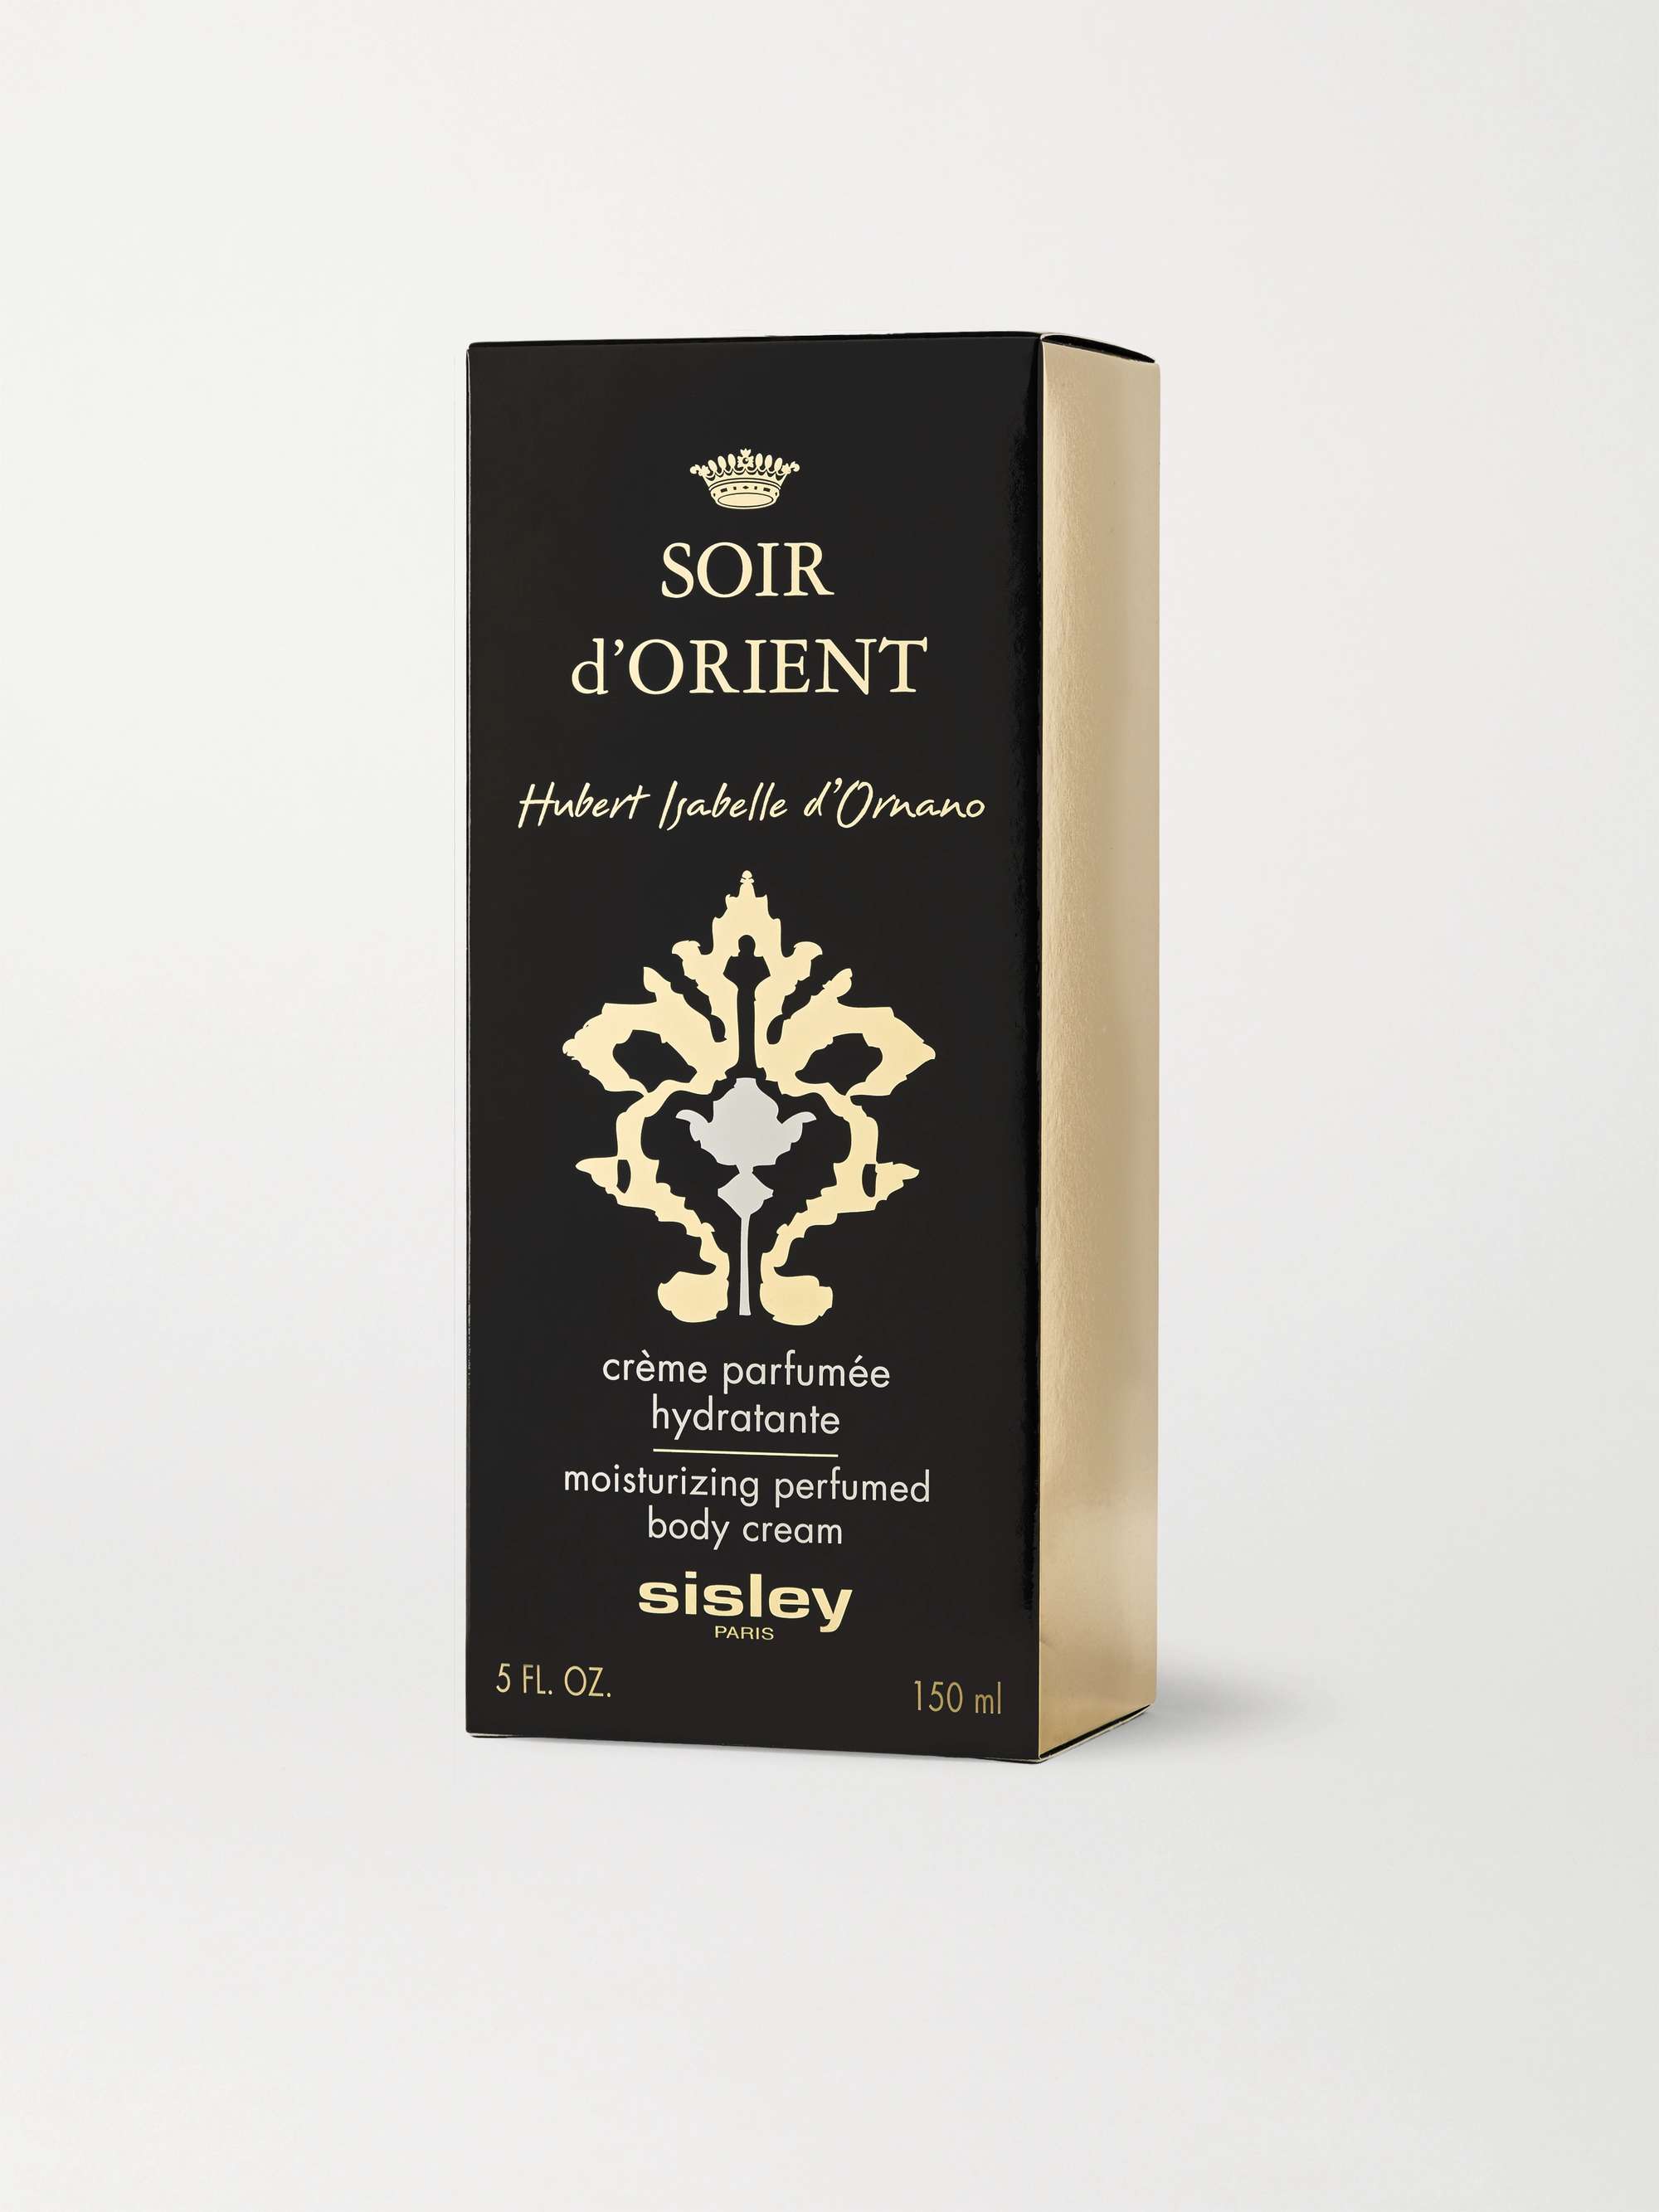 SISLEY Soir d'Orient Moisturizing Perfumed Body Cream, 150ml